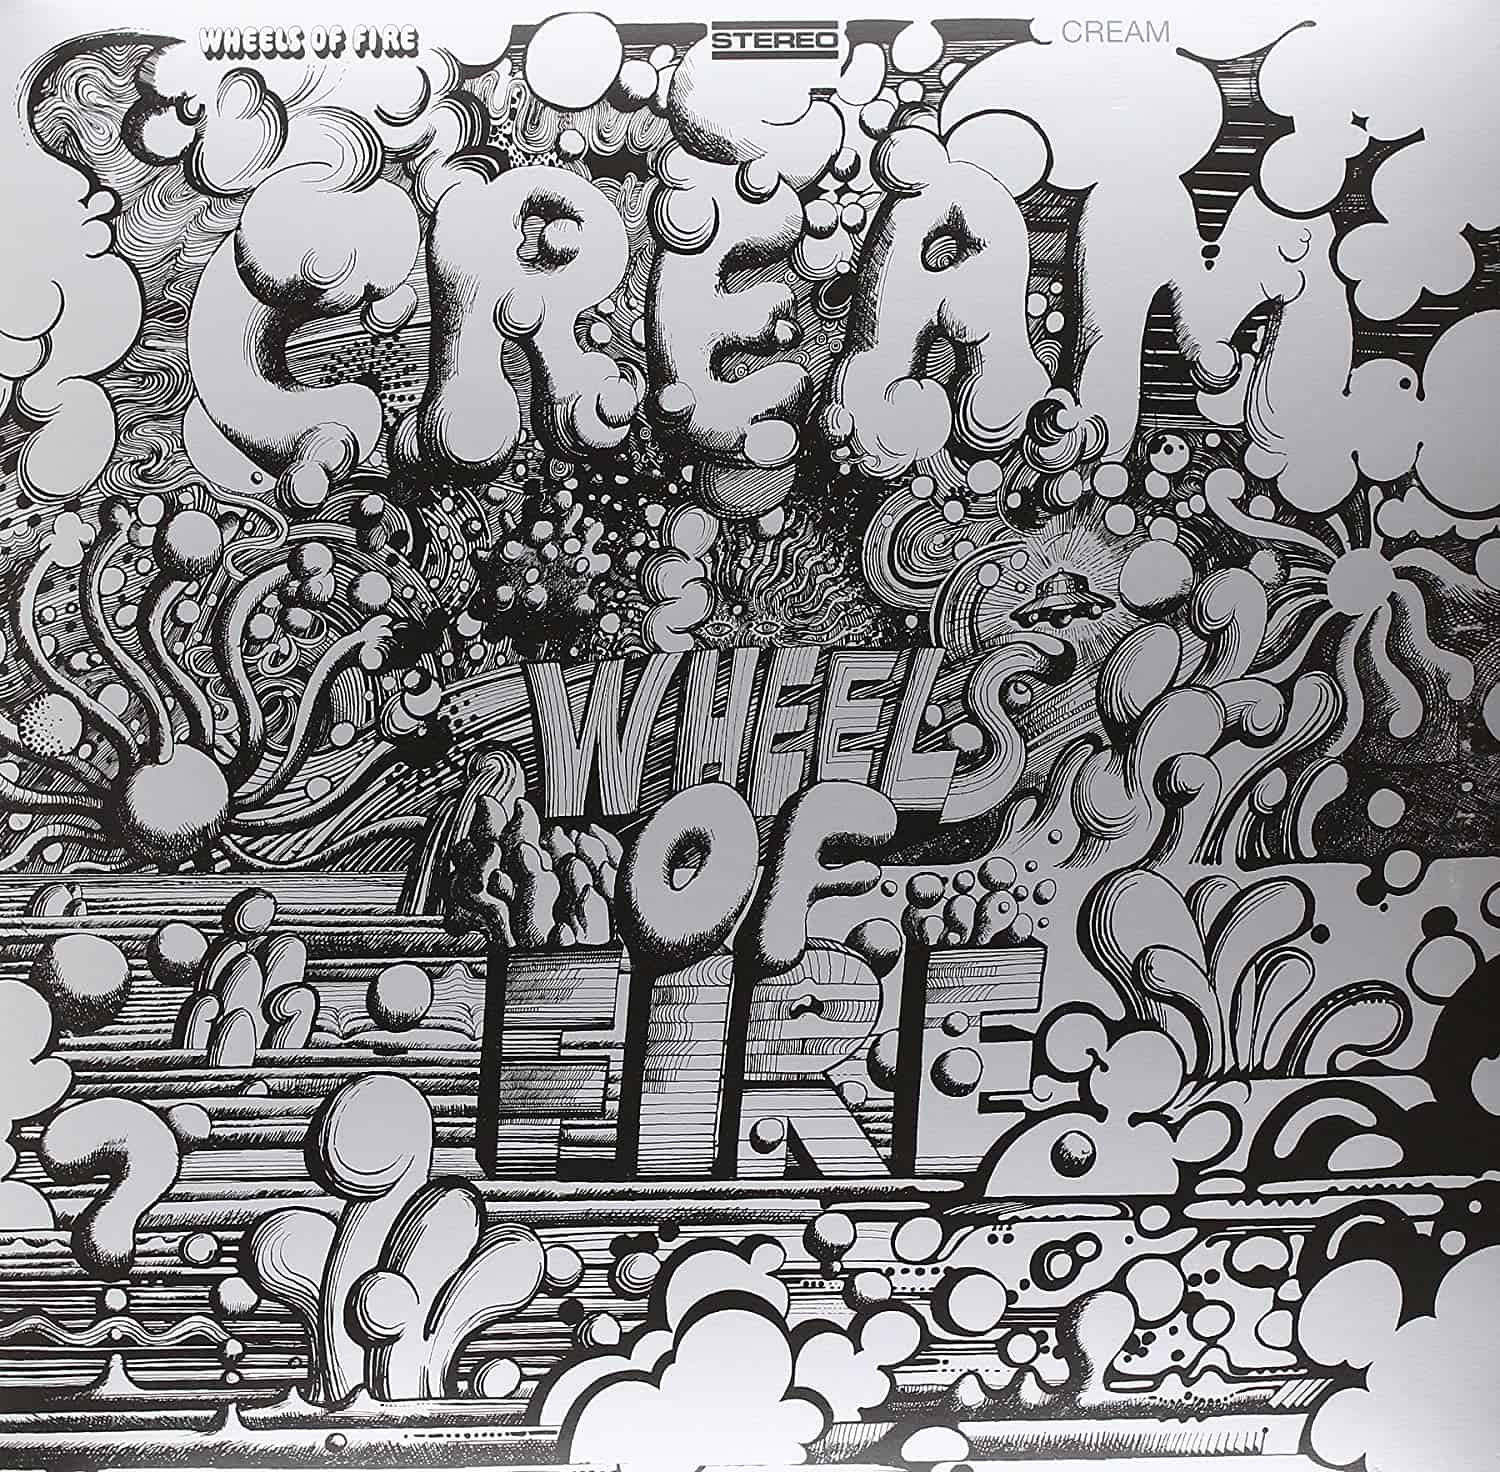 Cream-Wheels-of-Fire-vinyl-record-album-front